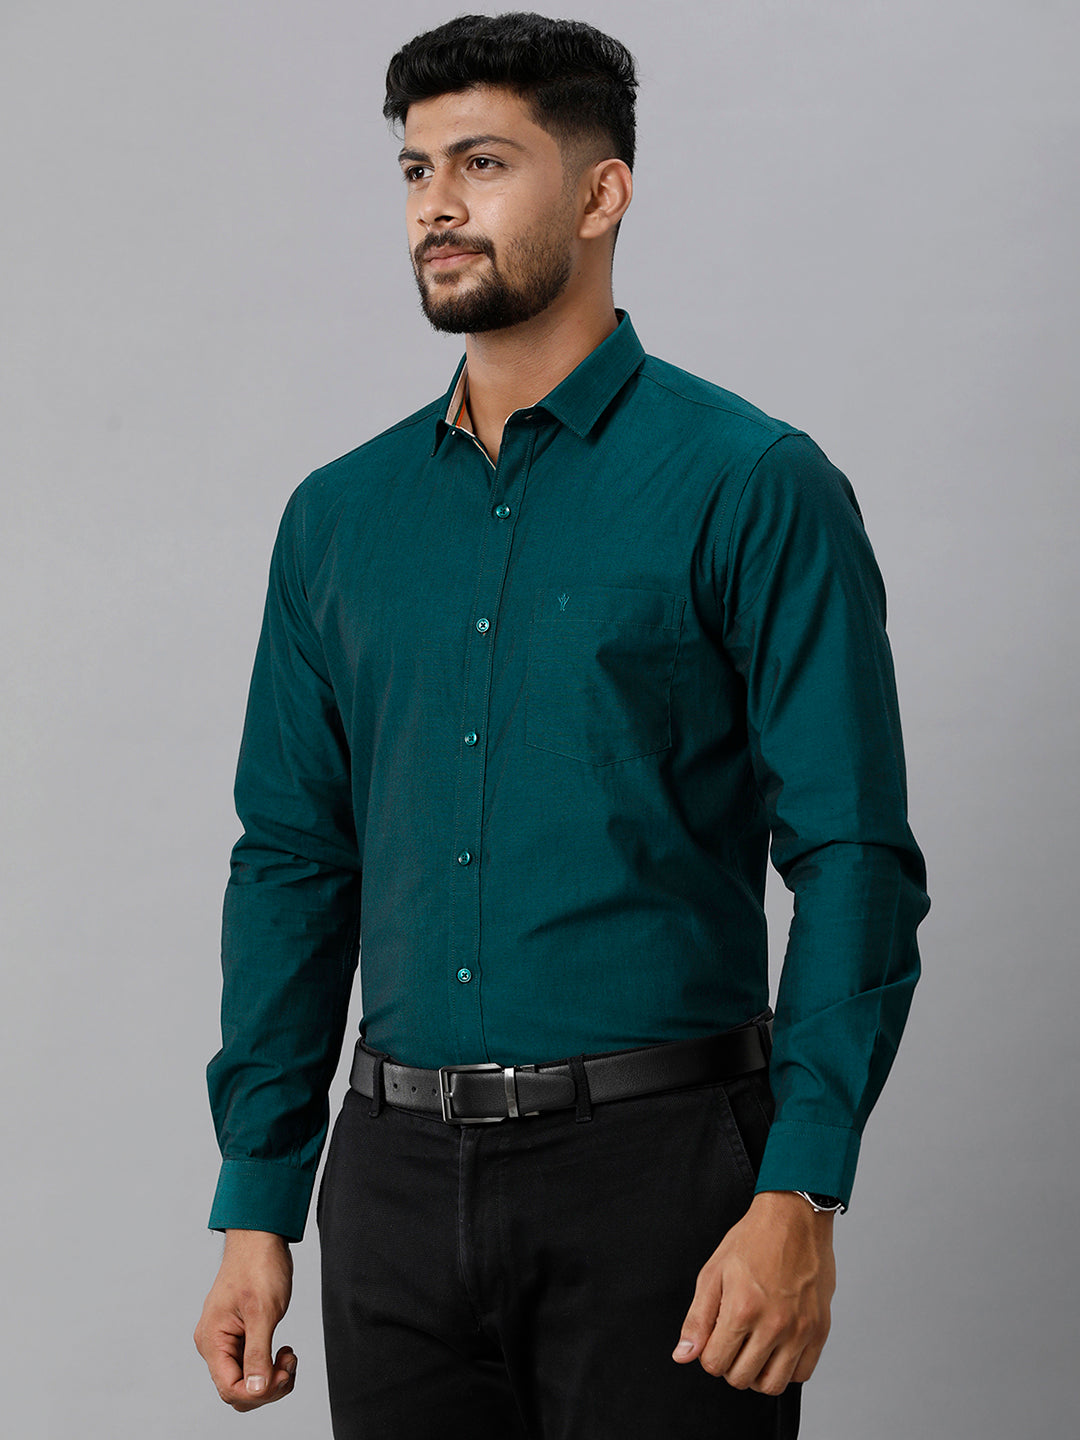 Mens Premium Cotton Formal Shirt Full Sleeves Dark Green MH G116-Front view